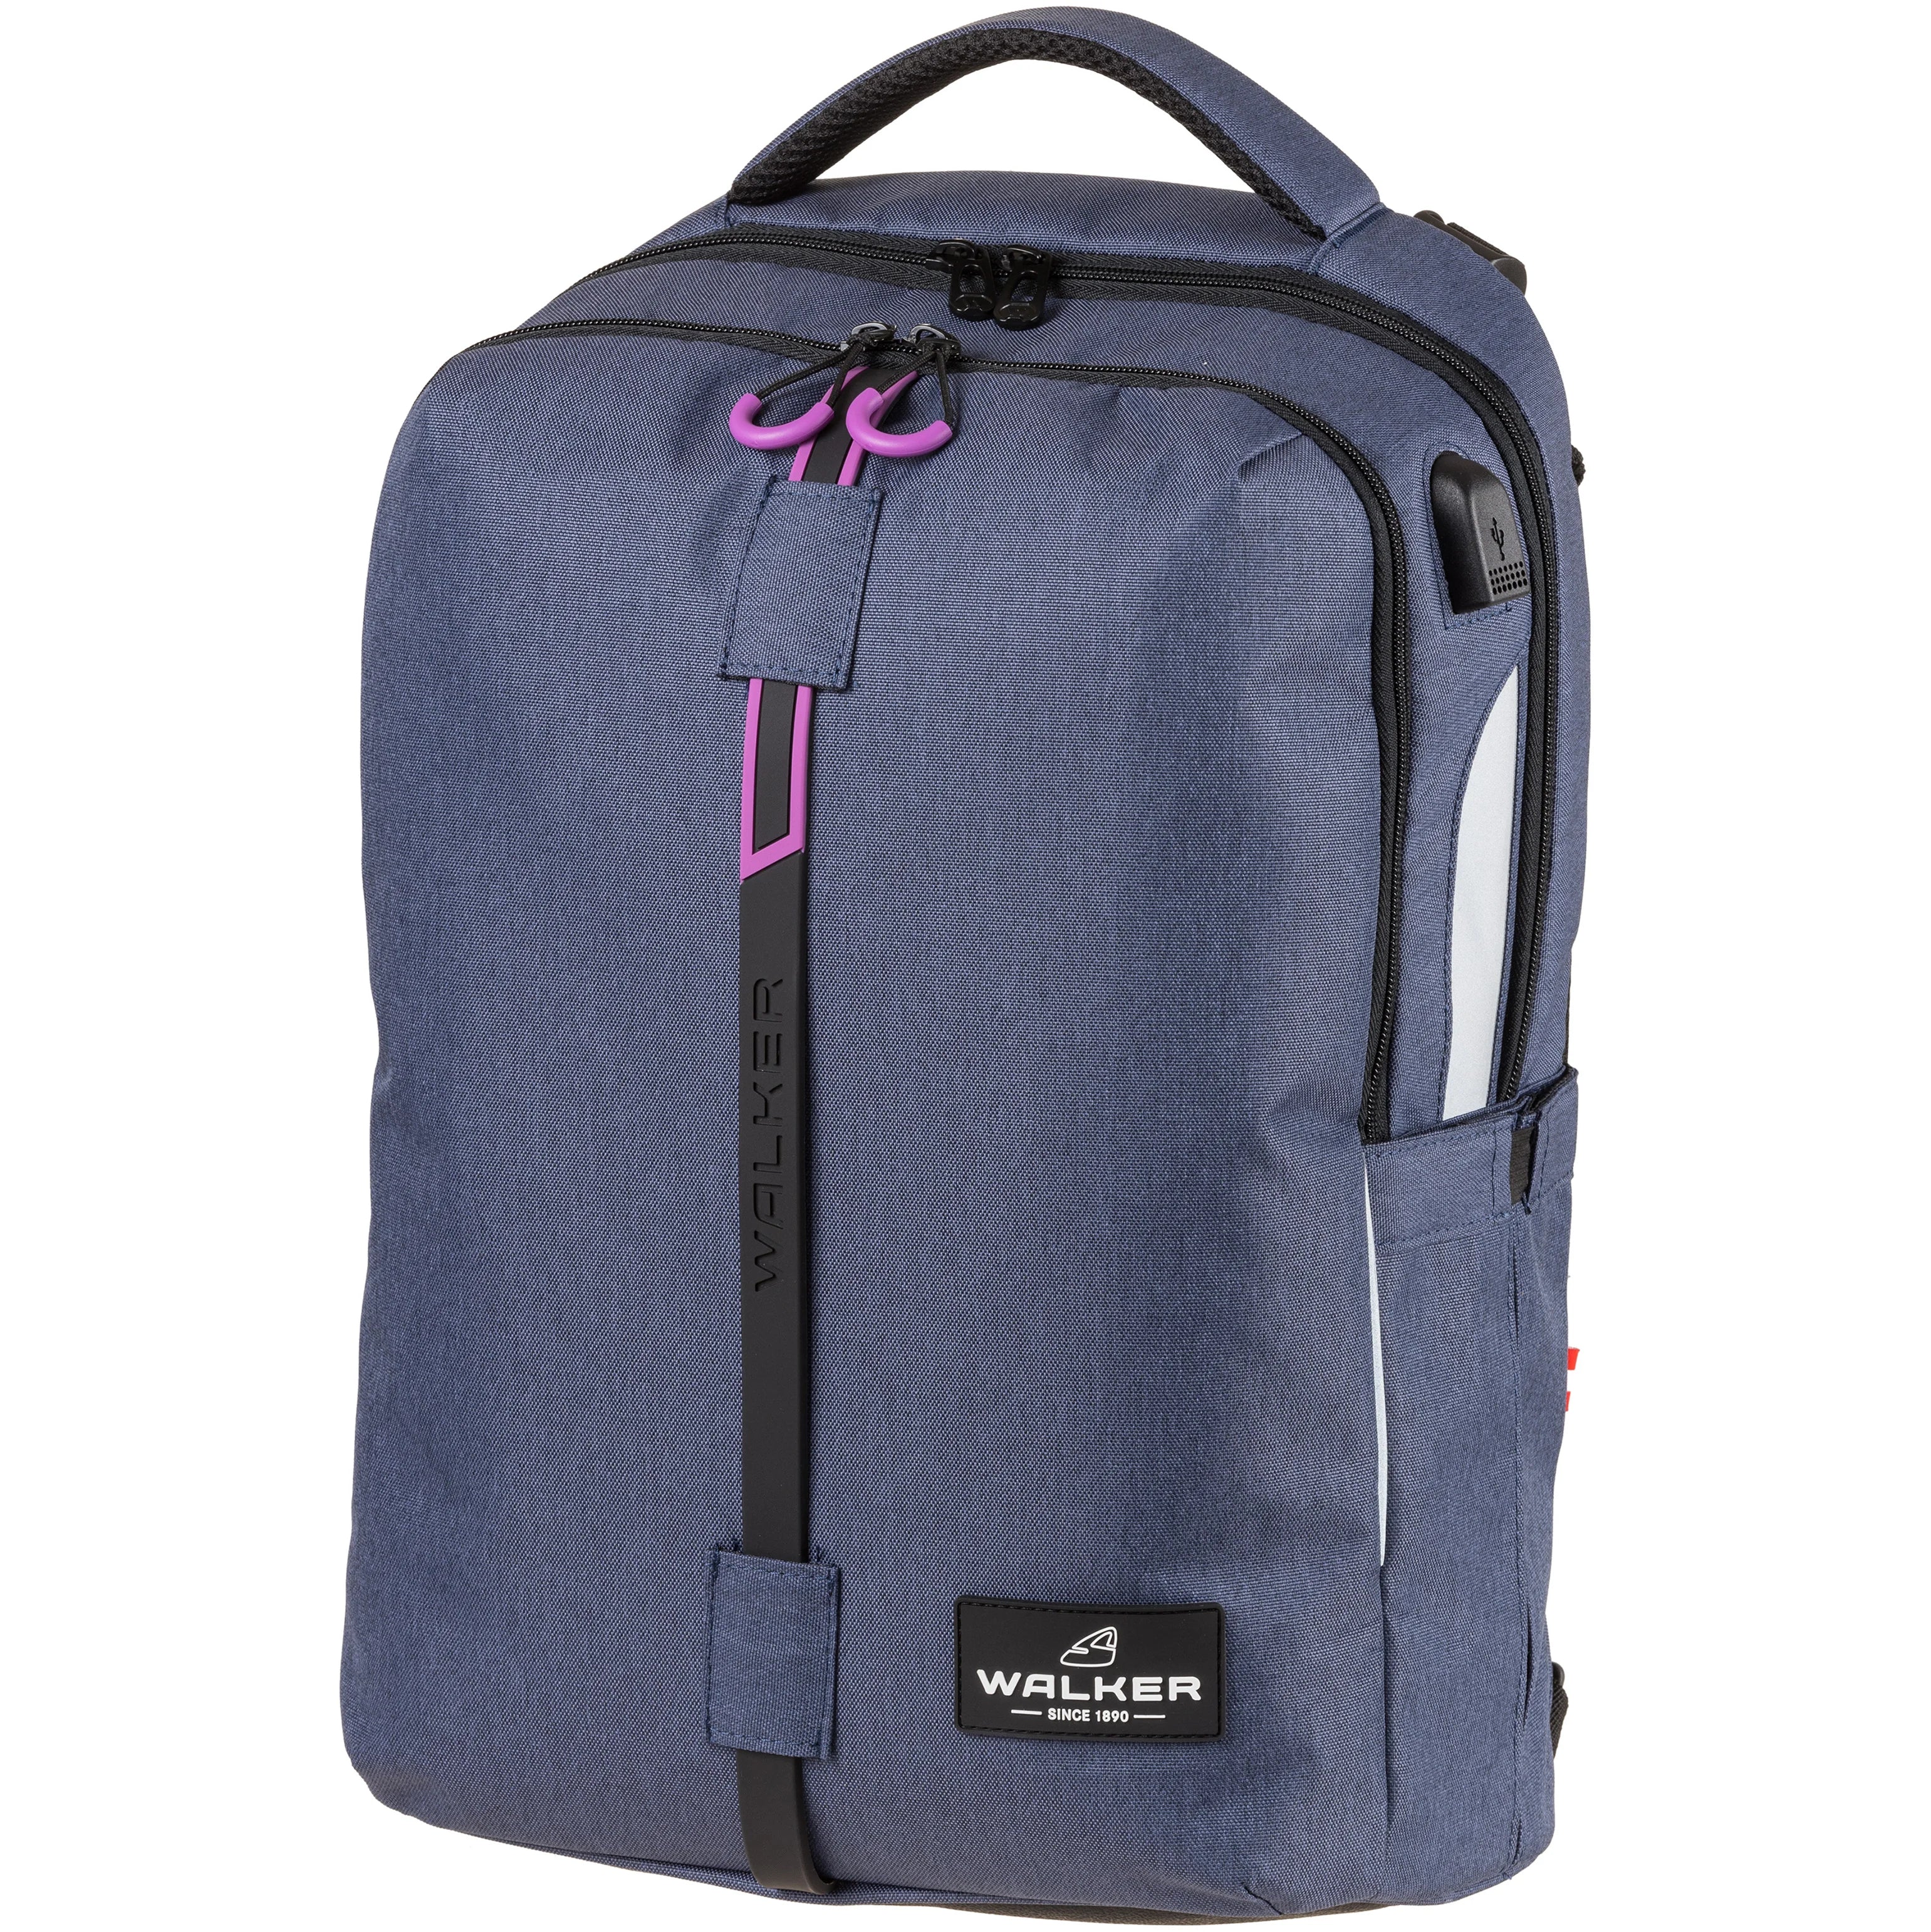 Walker Bags Elite Sac à Dos 46 cm - Bleu Lierre/Rose